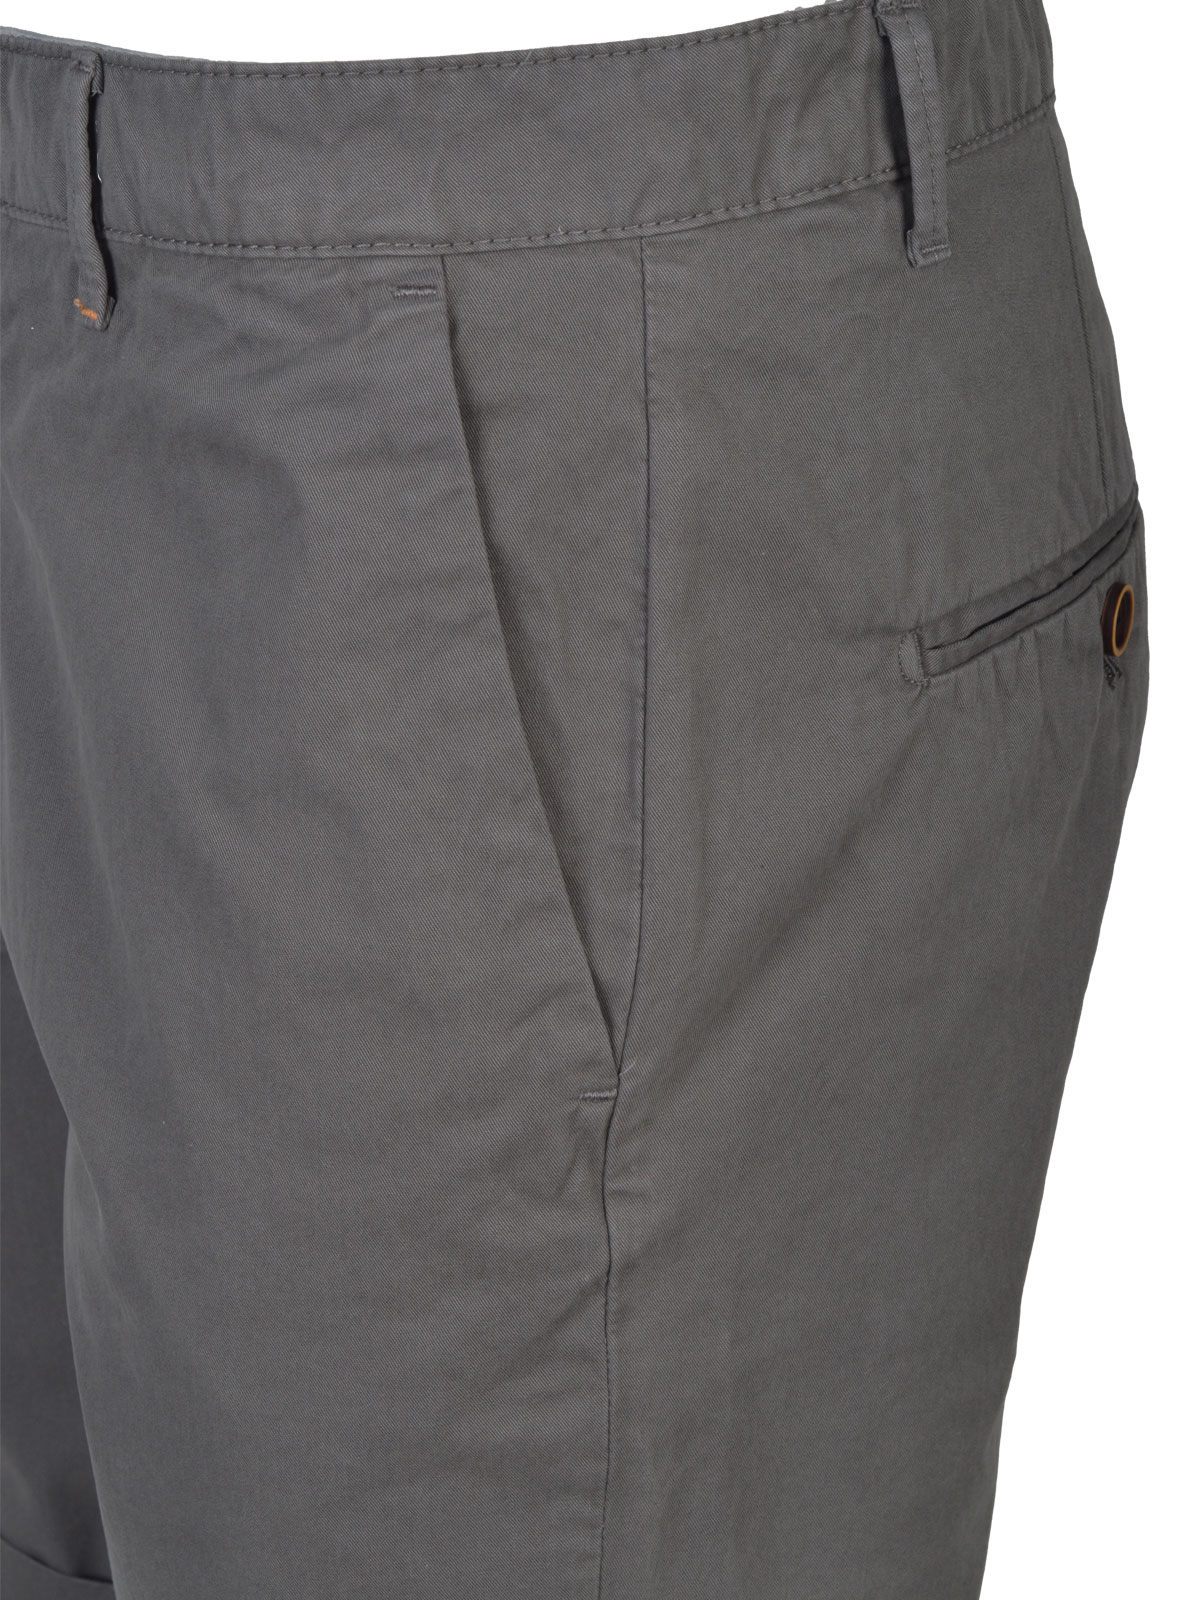  gray cotton shorts  - 67070 € 38.24 img2